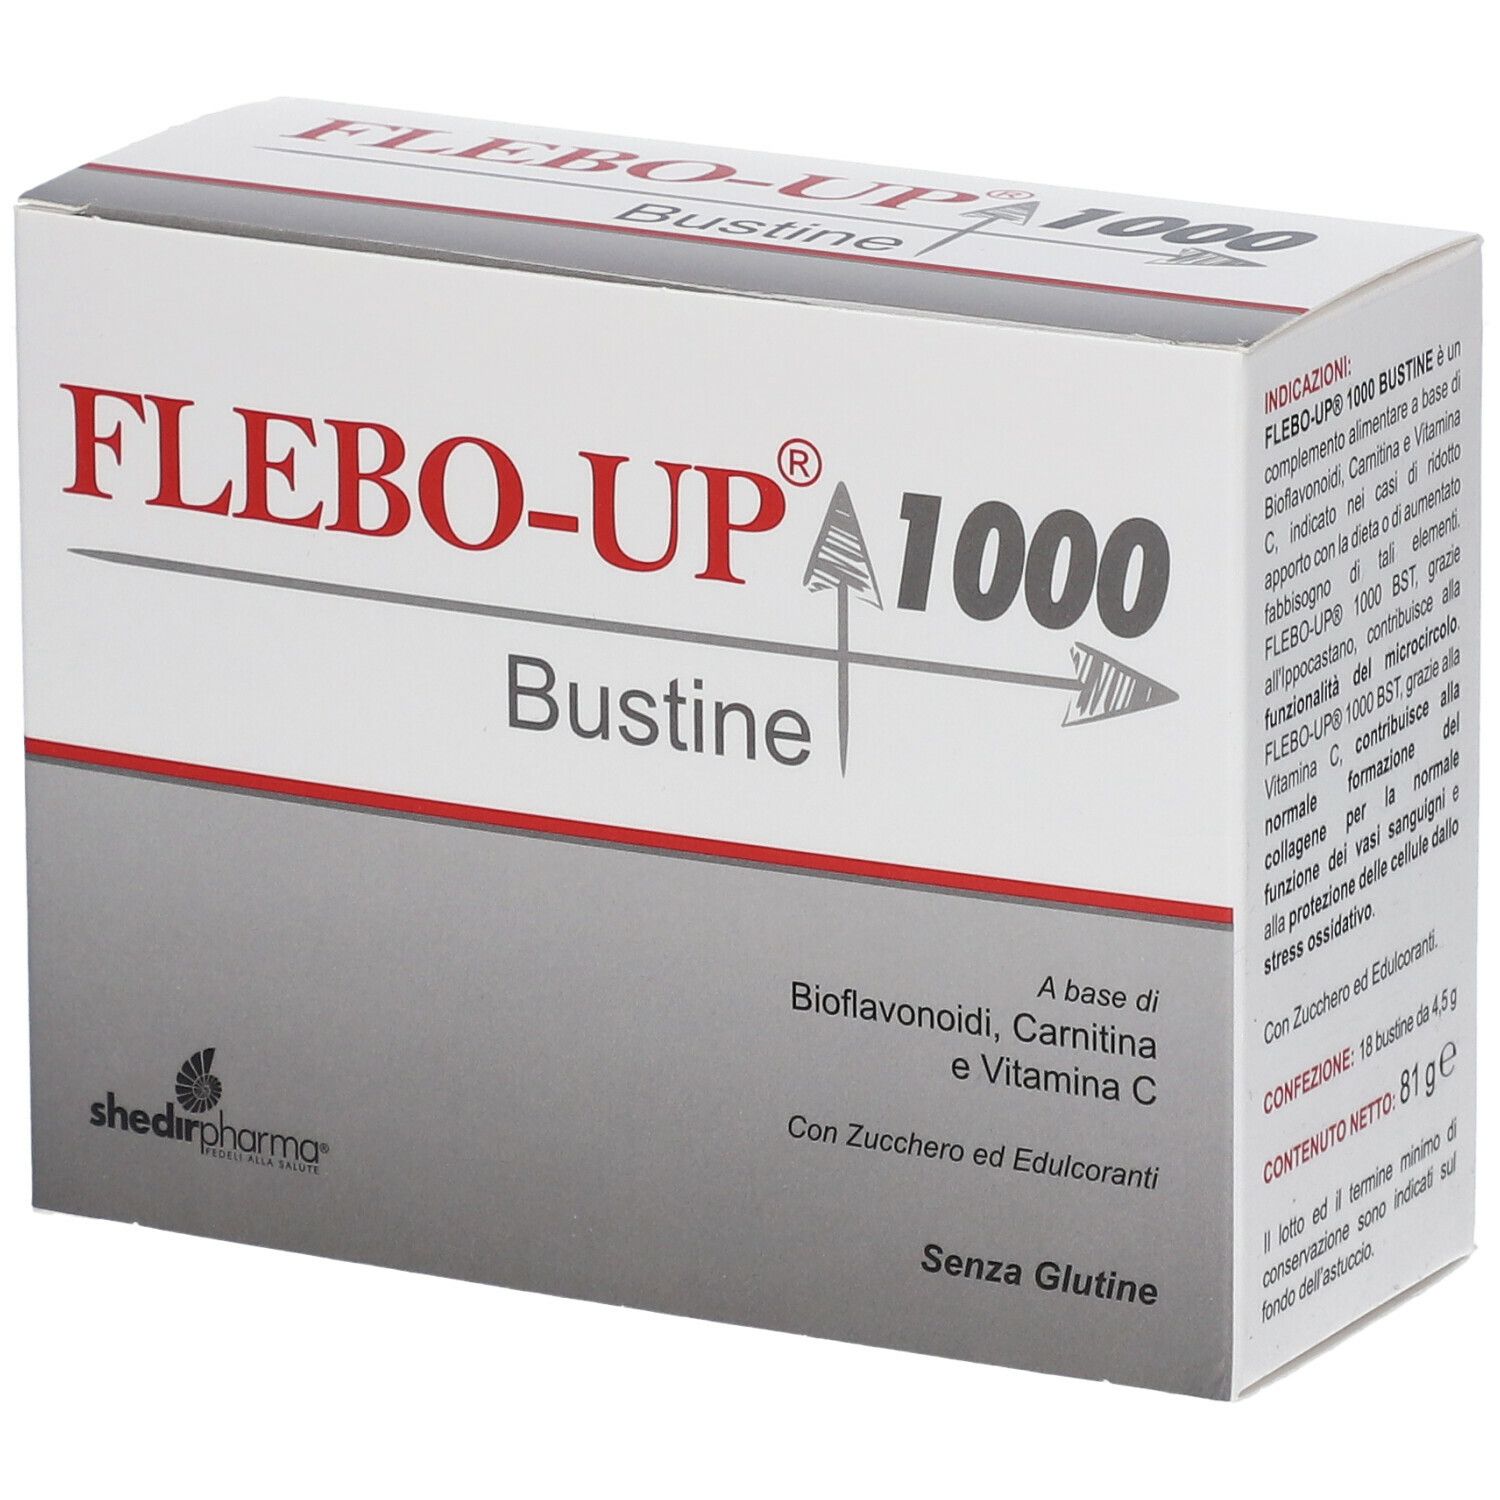 Flebo-Up® 1000 Bustine